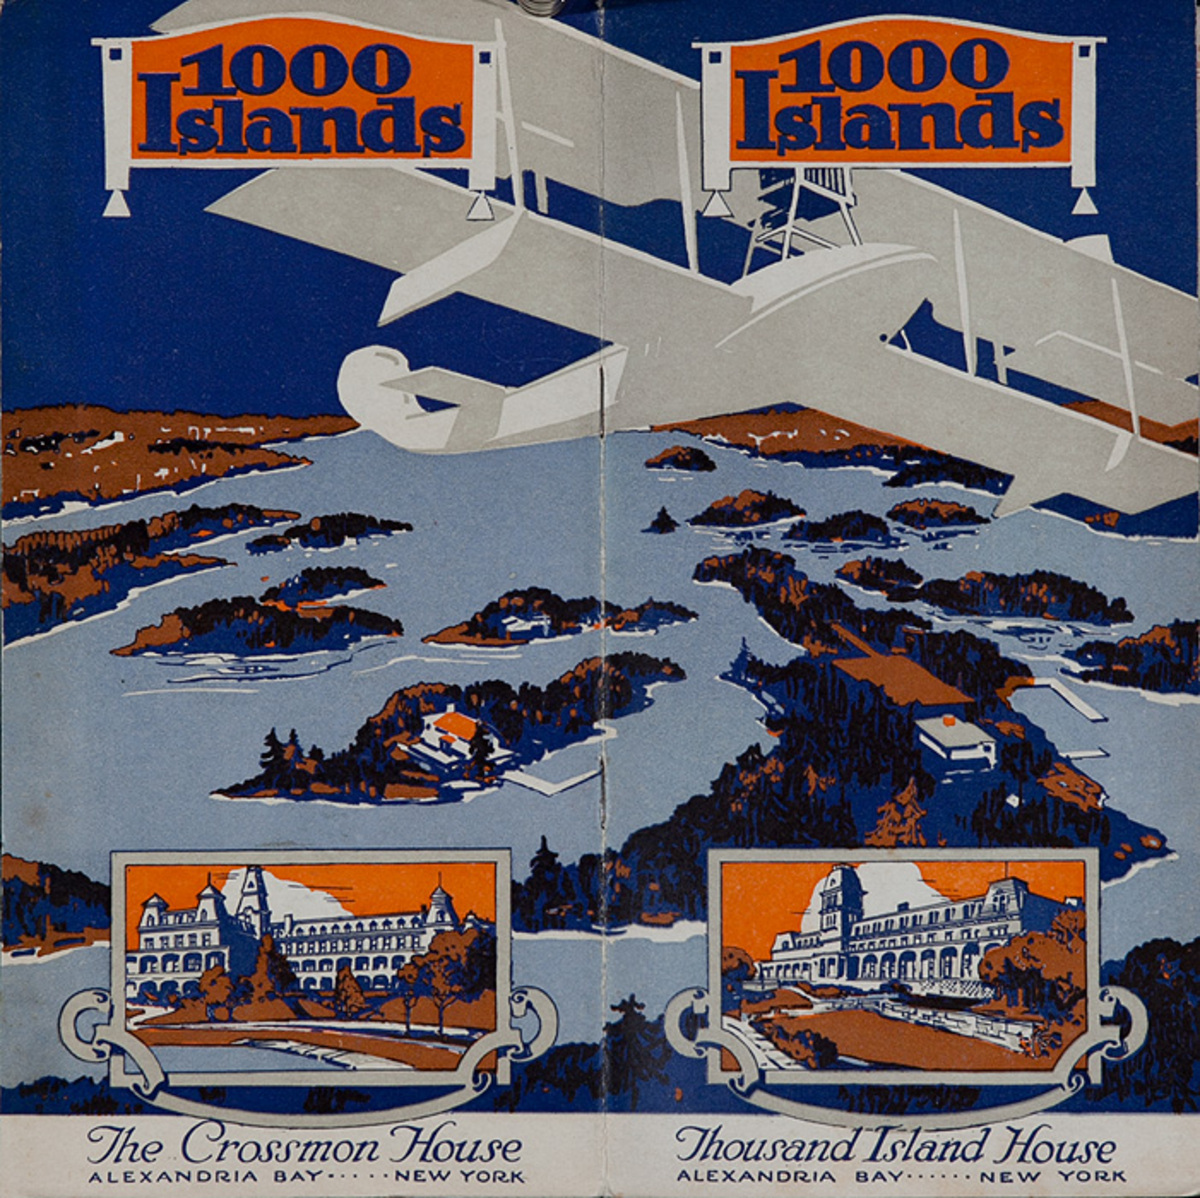 Original 1,000 Islands and the Crossmon House Original Travel Brochure